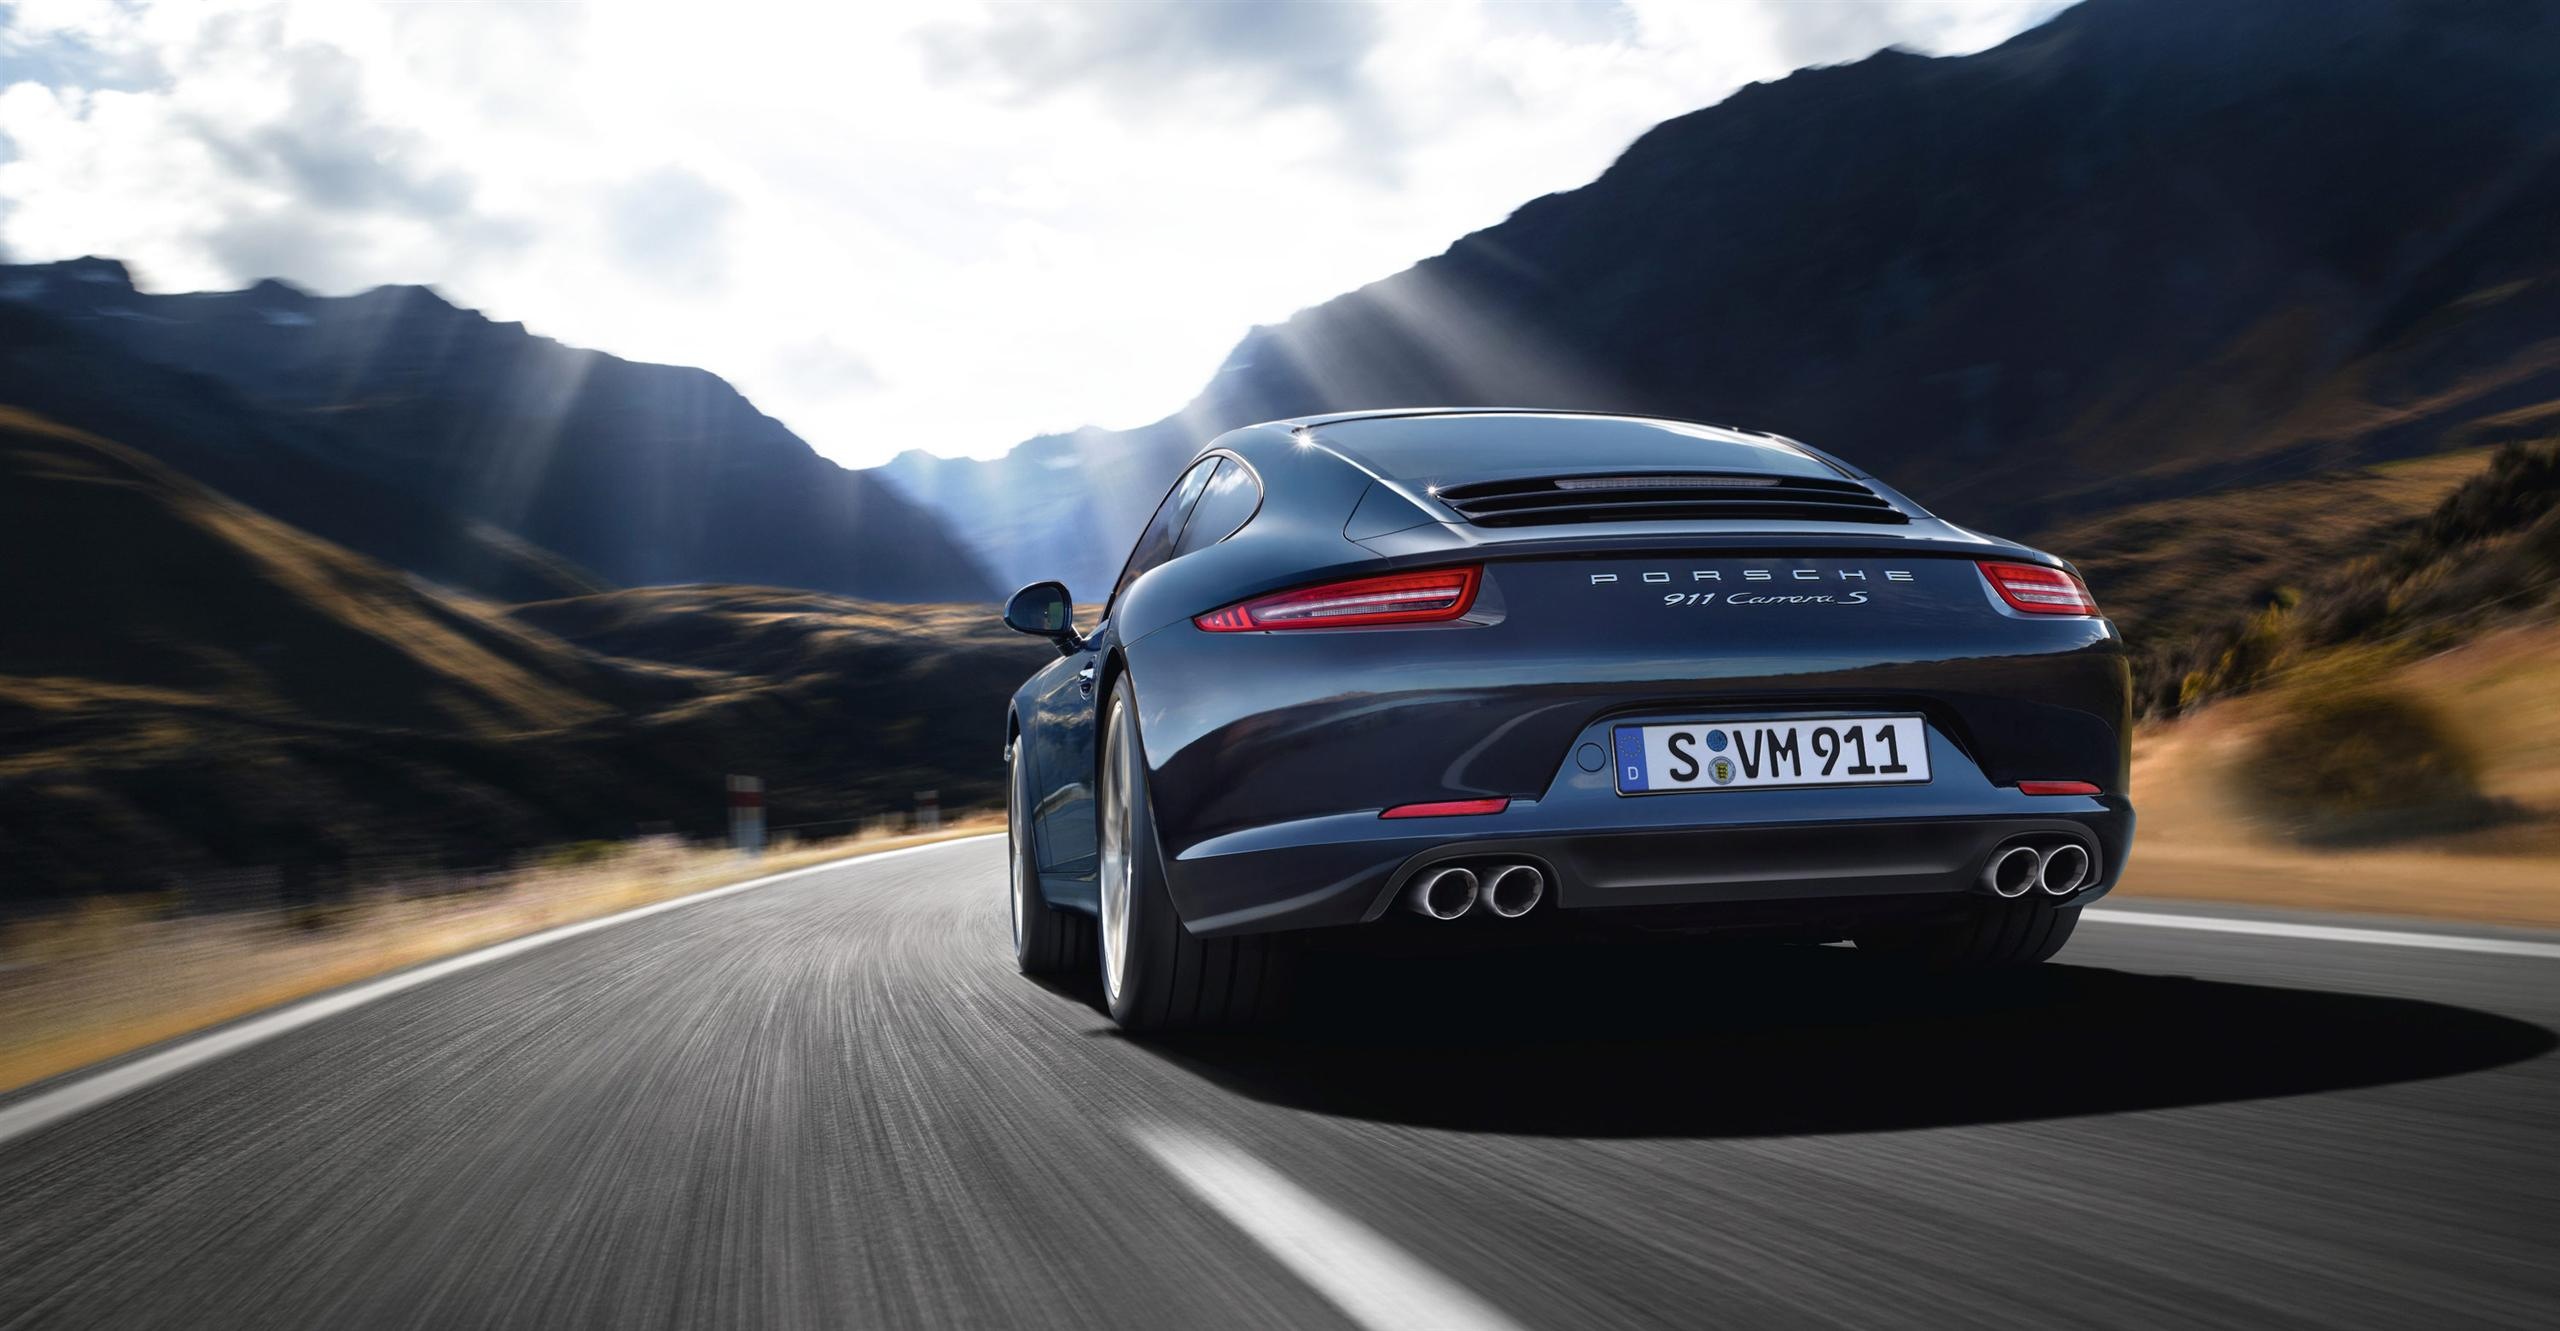 Porsche 911 High Definition Wallpapers HD Wallpapers 1080p Cars